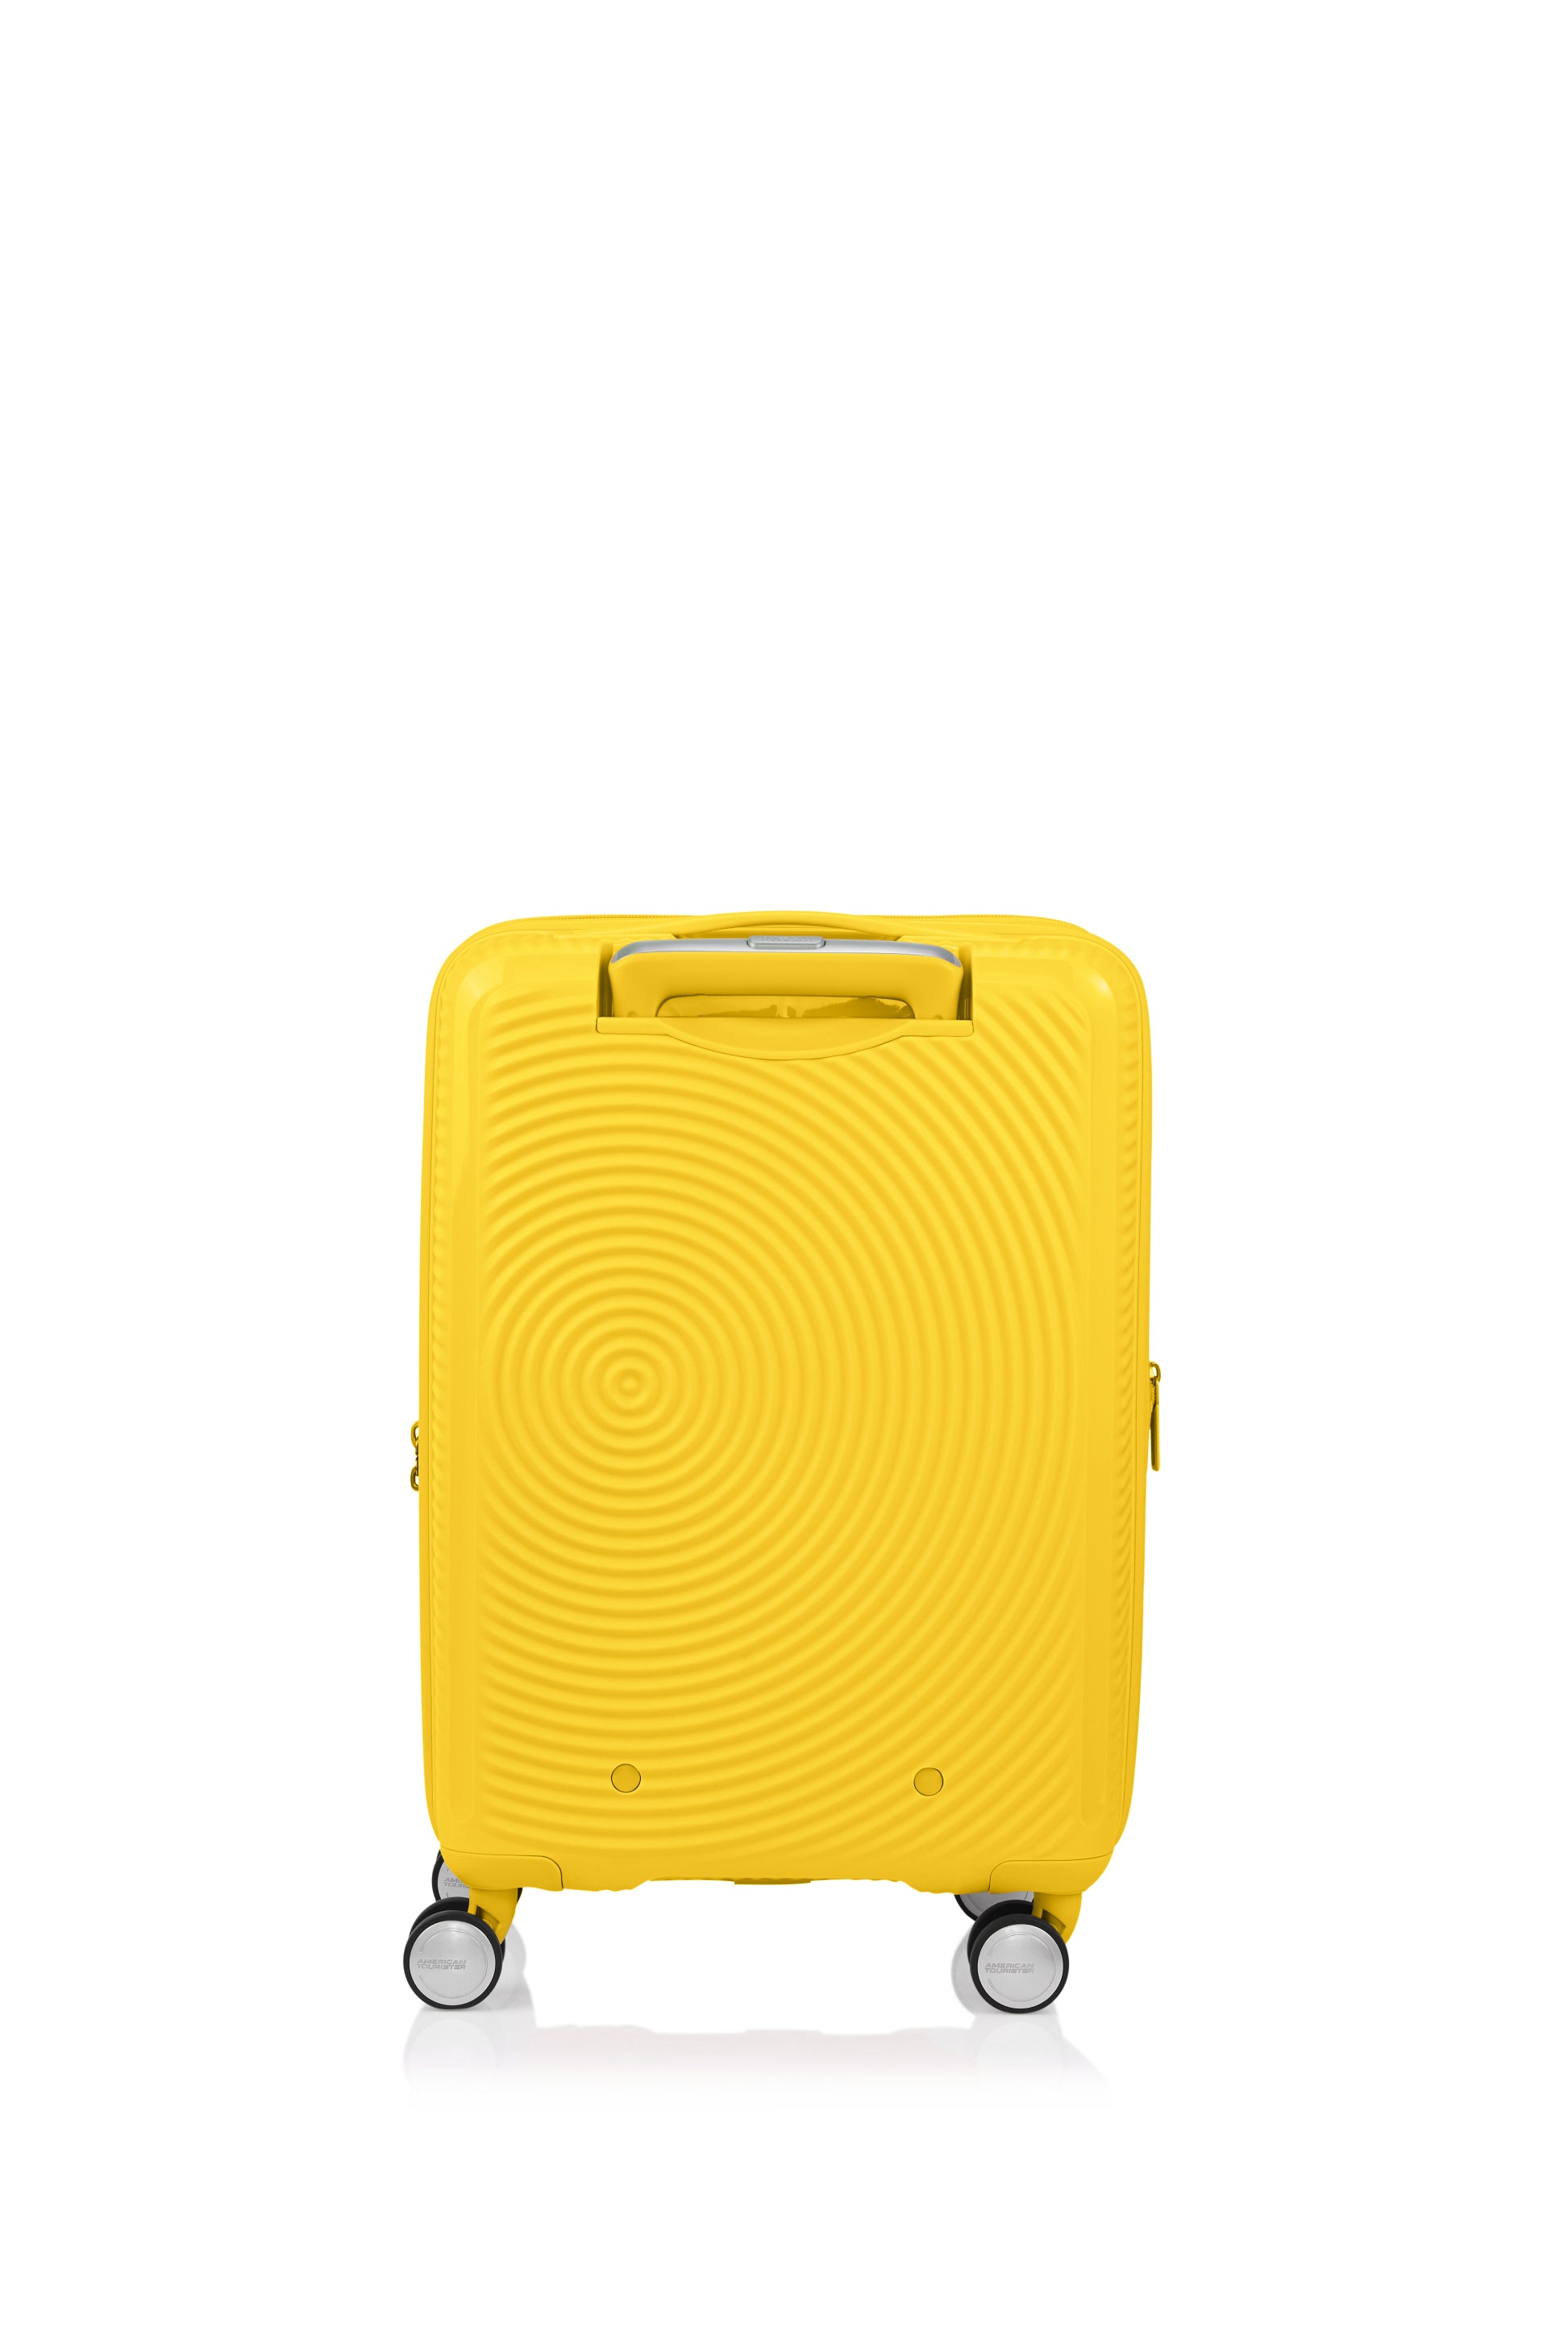 American Tourister - Curio 2.0 55cm Small Suitcase - Golden Yellow-1